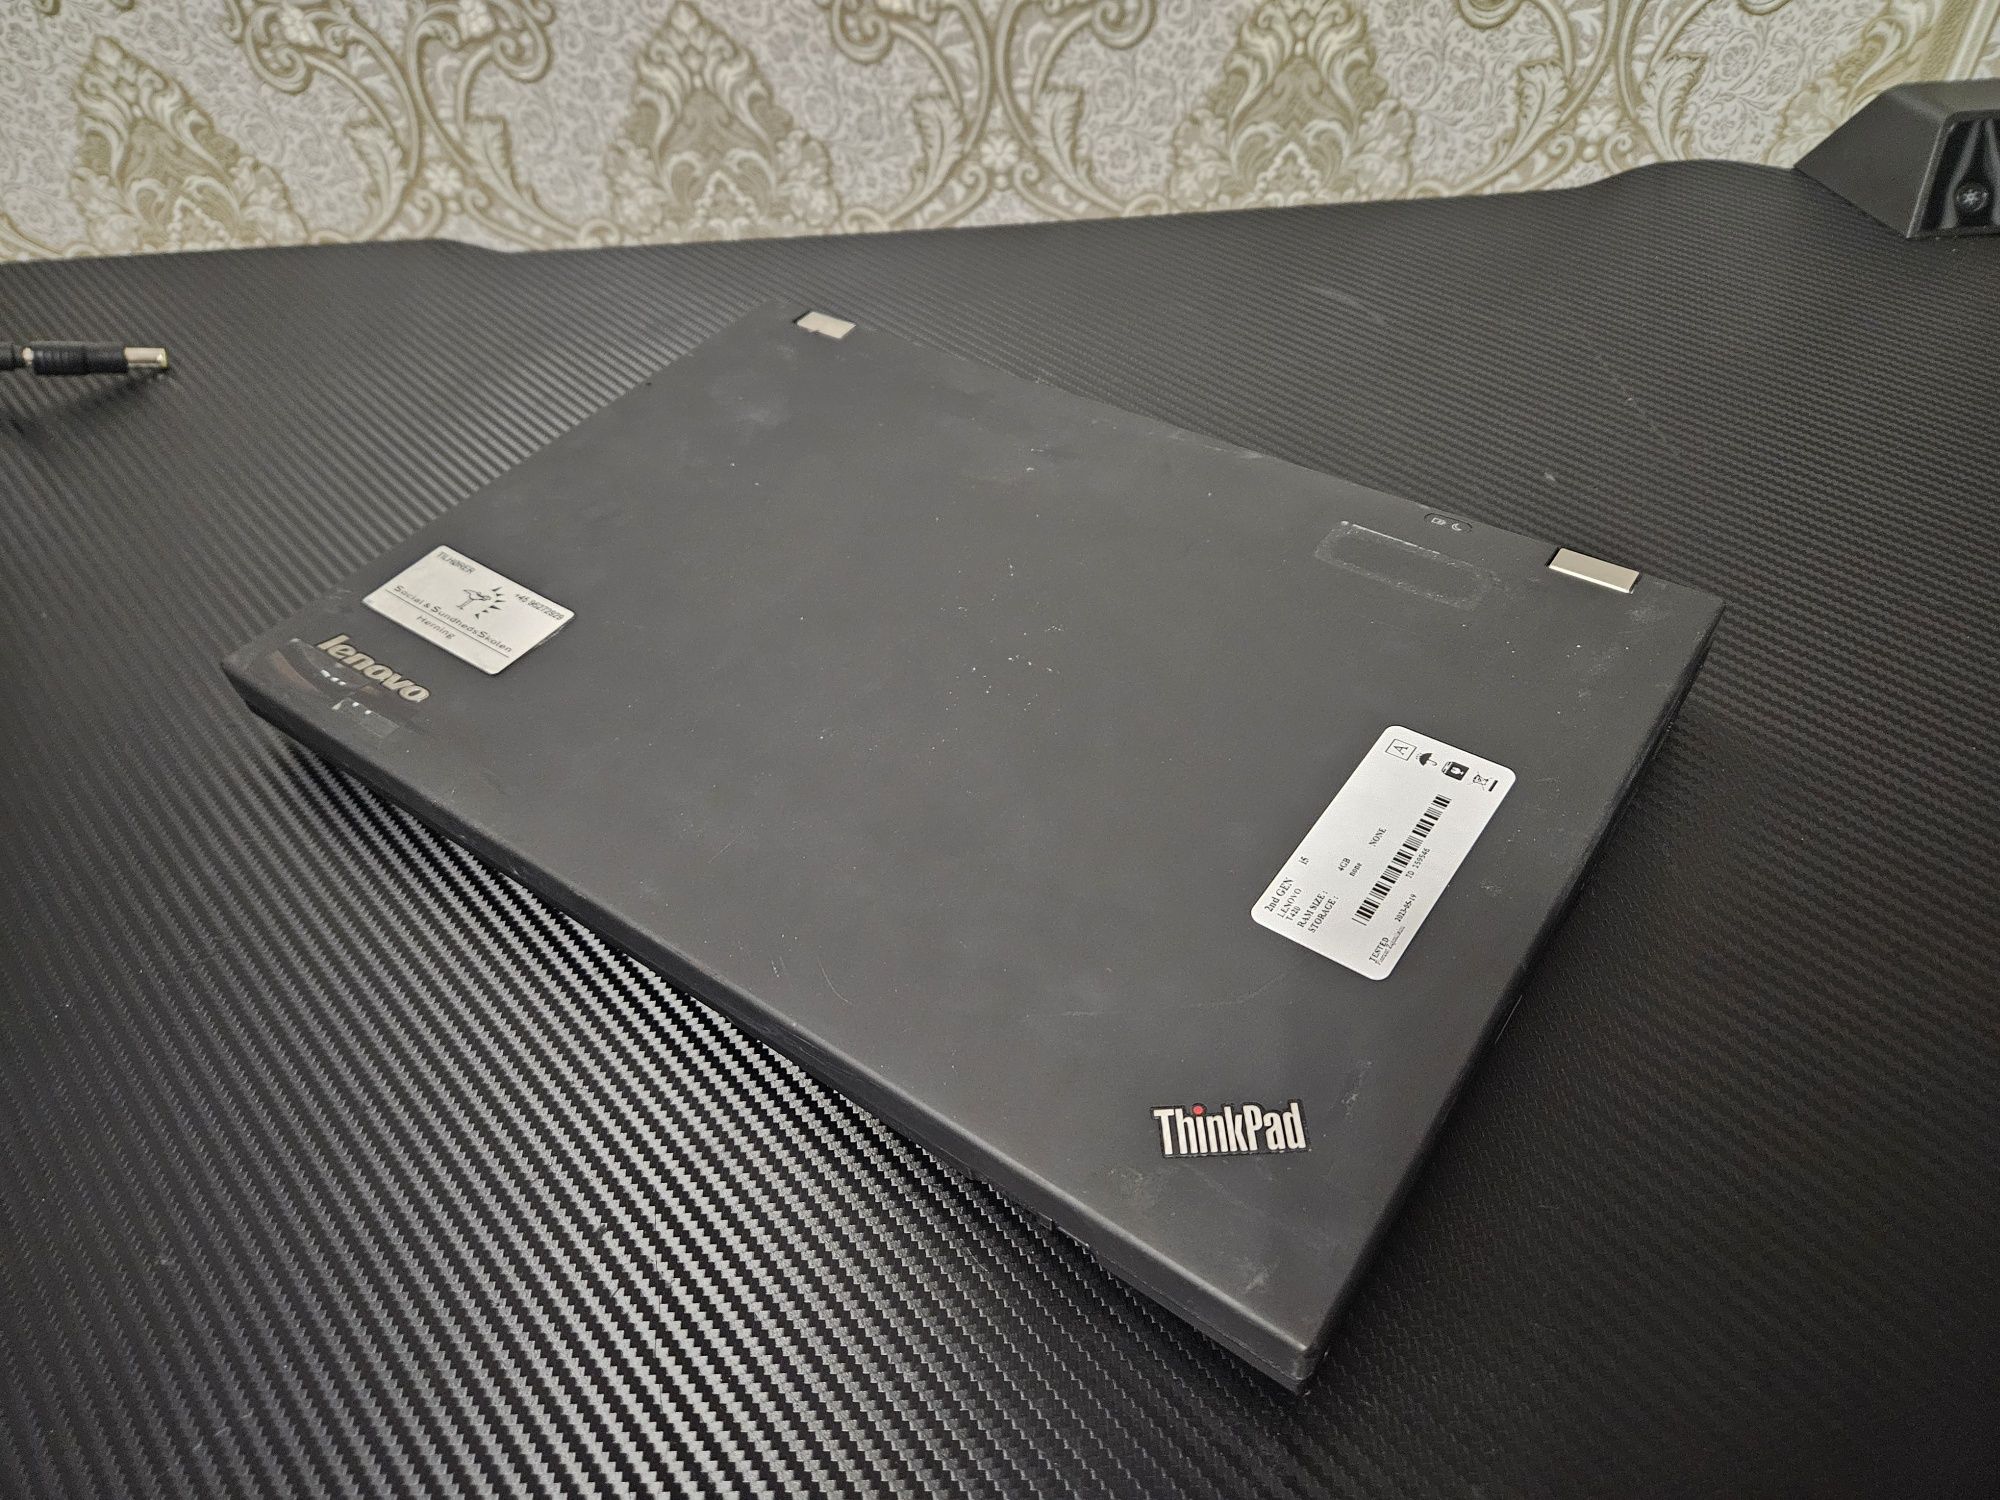 Lenovo ThinkPad T420 | i5 2410M / 4gb ram / 500gb